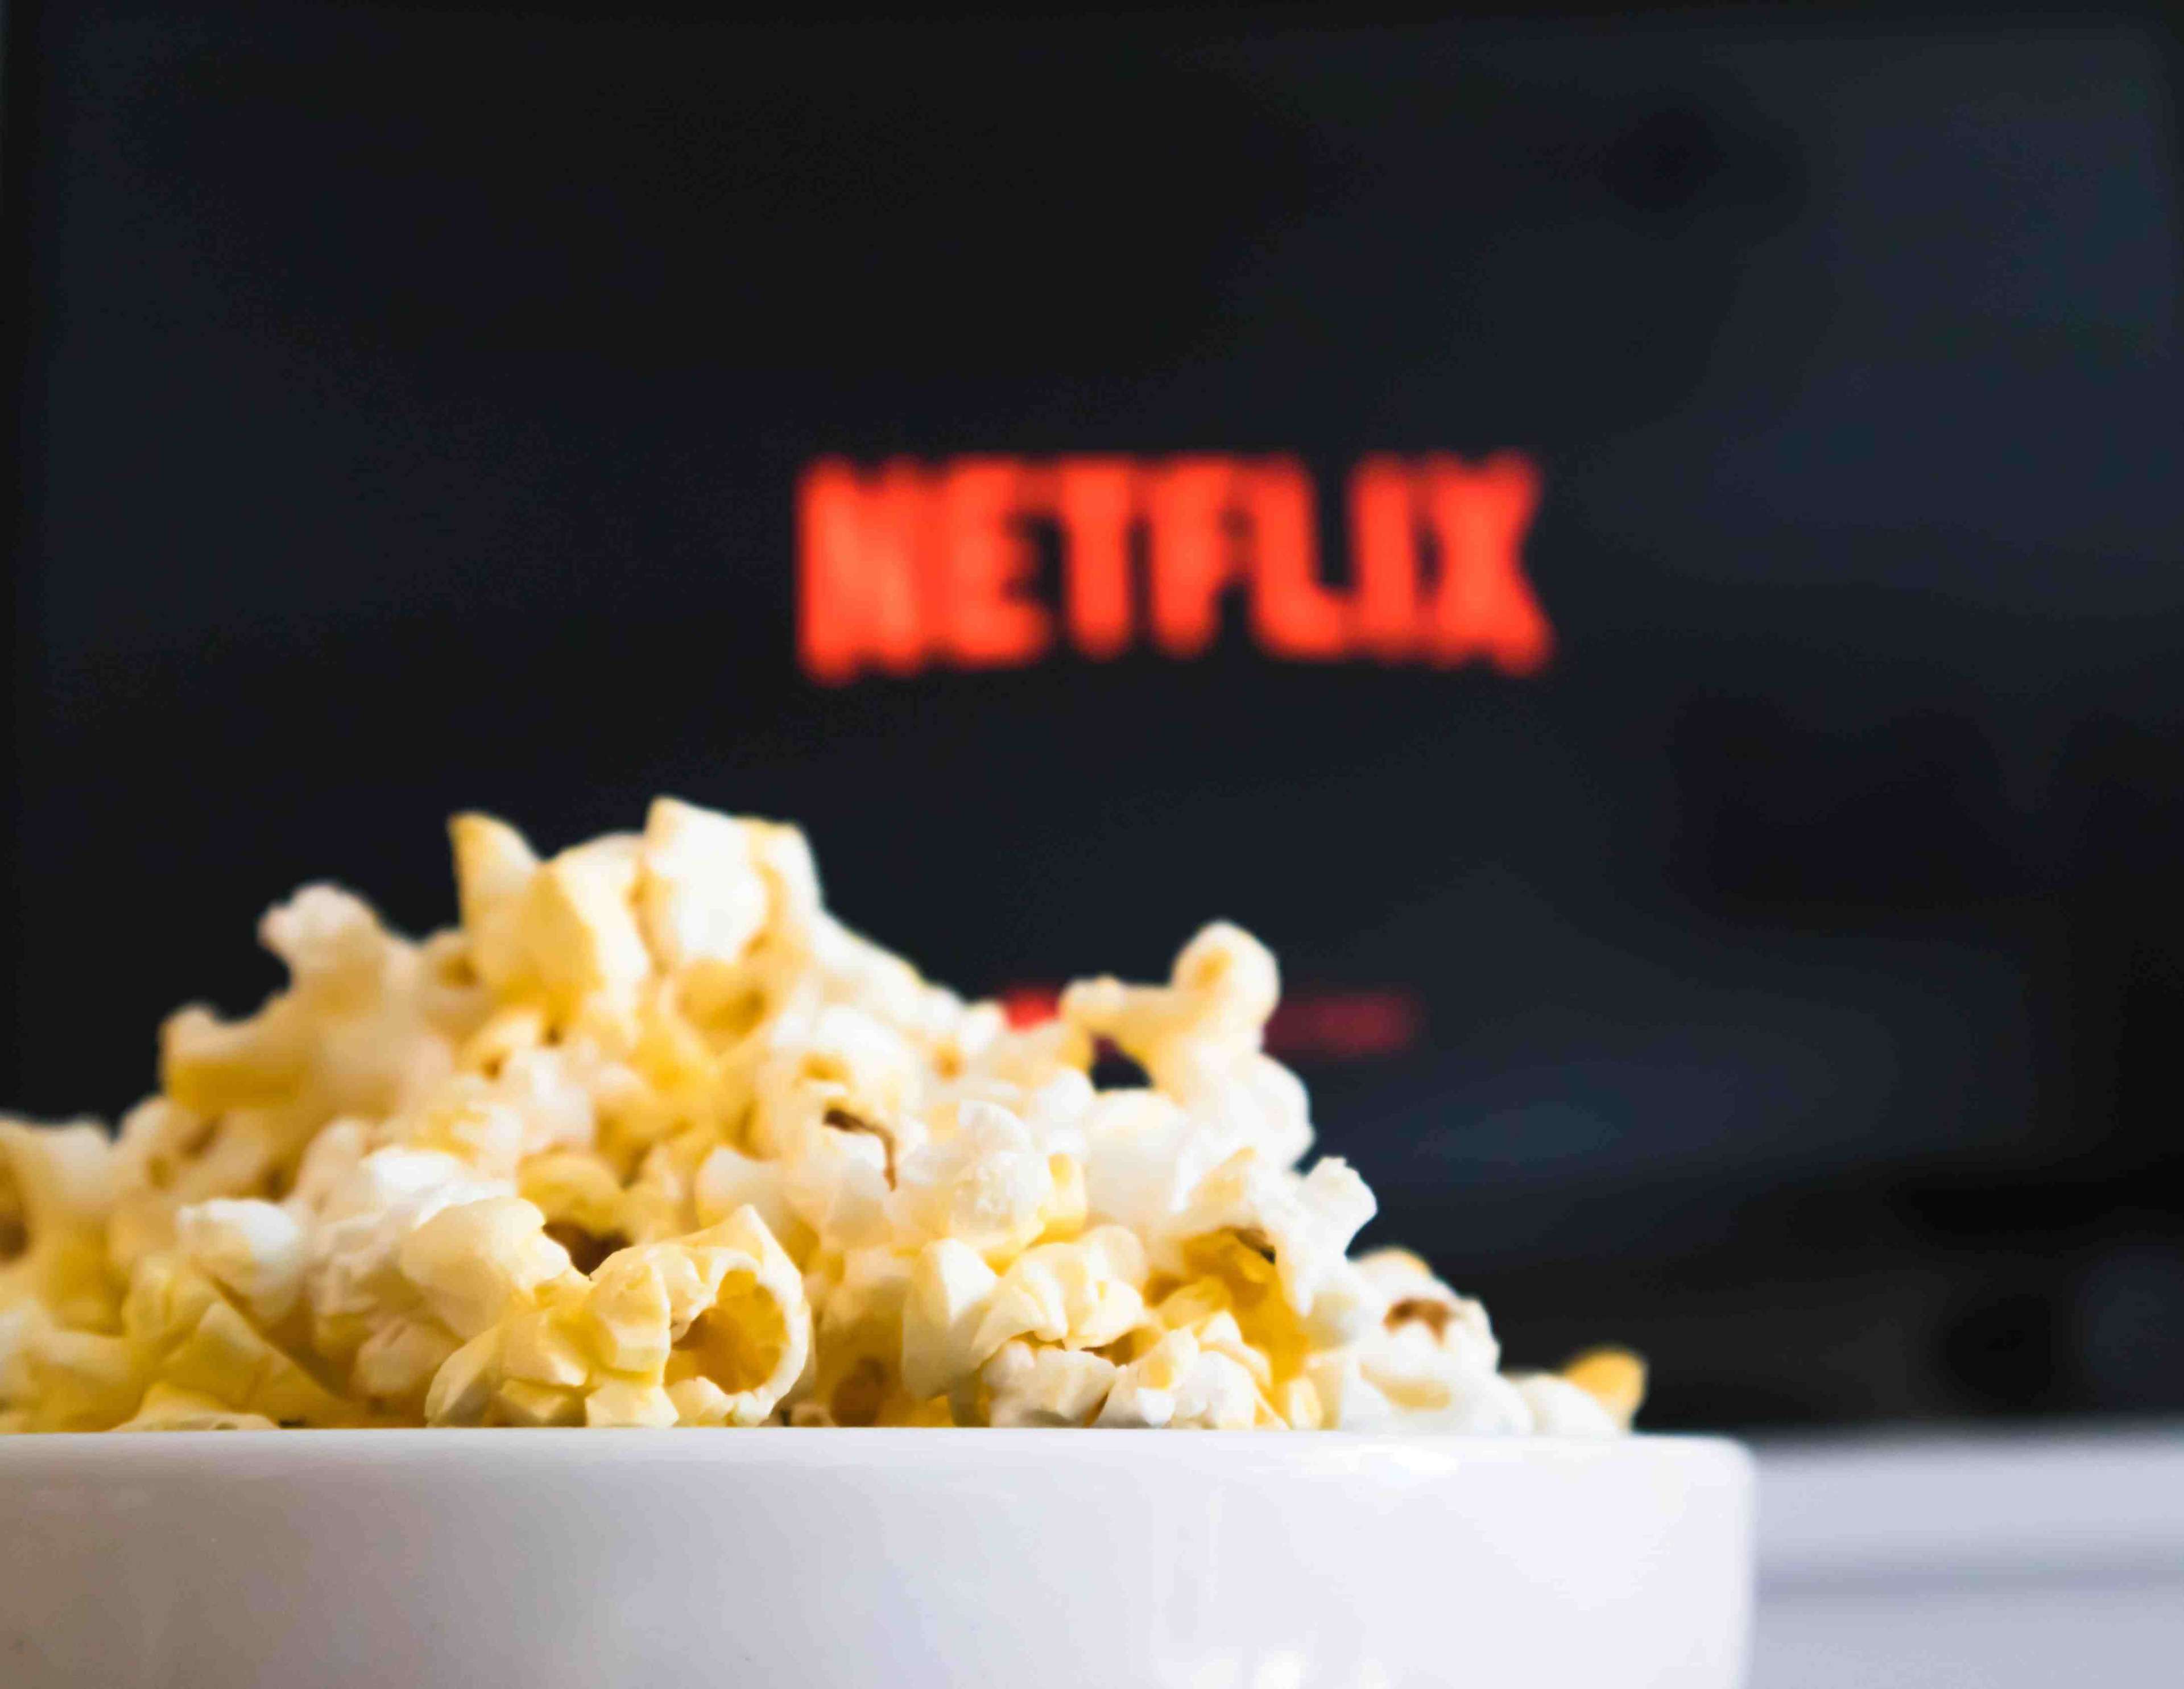 Midnight snack popcorn and Netflix